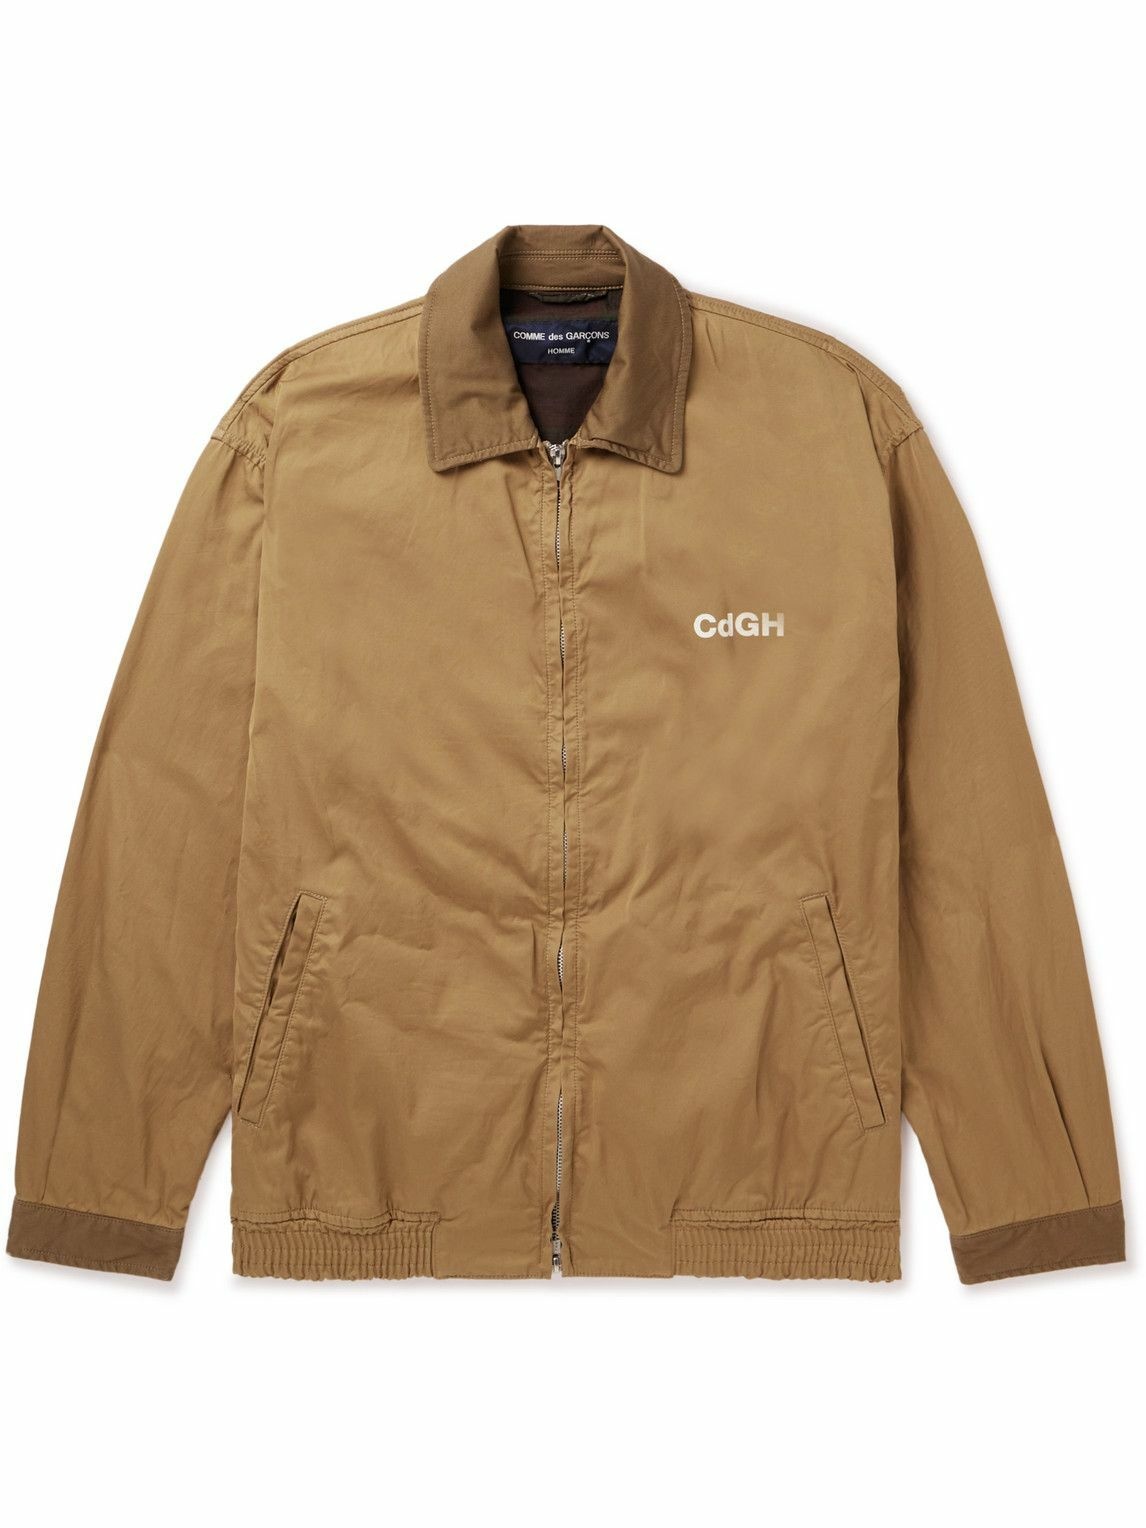 Comme des Garçons HOMME - Logo-Print Cotton-Gabardine Jacket - Neutrals ...